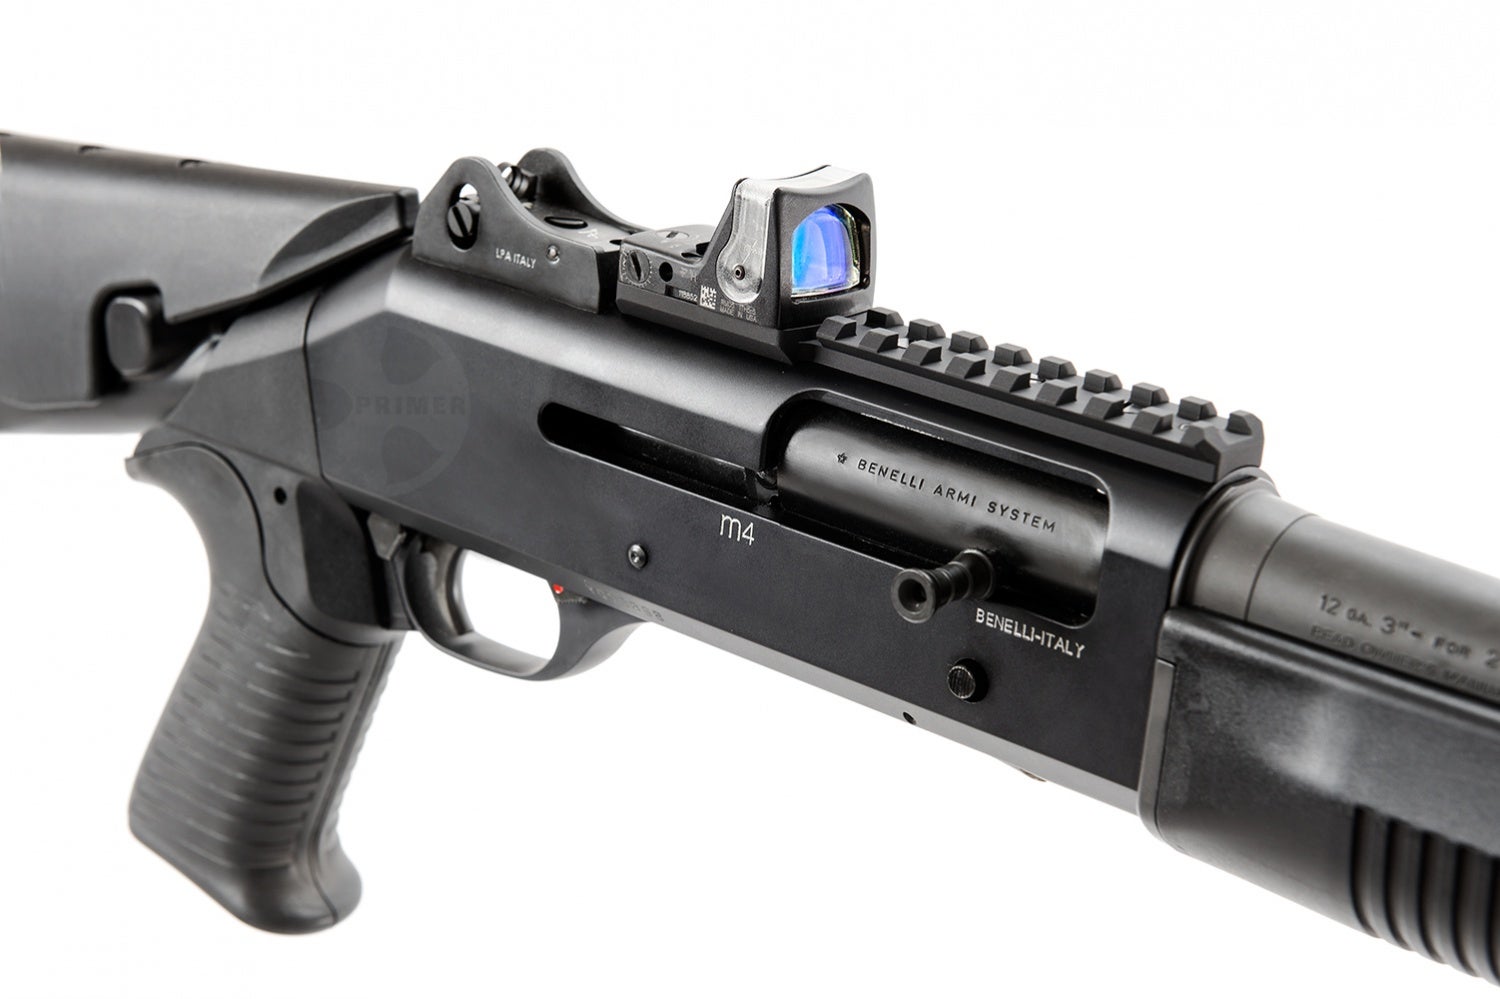 RMR Optic Mount for Benelli Shotgun SCALARWORKS SYNC